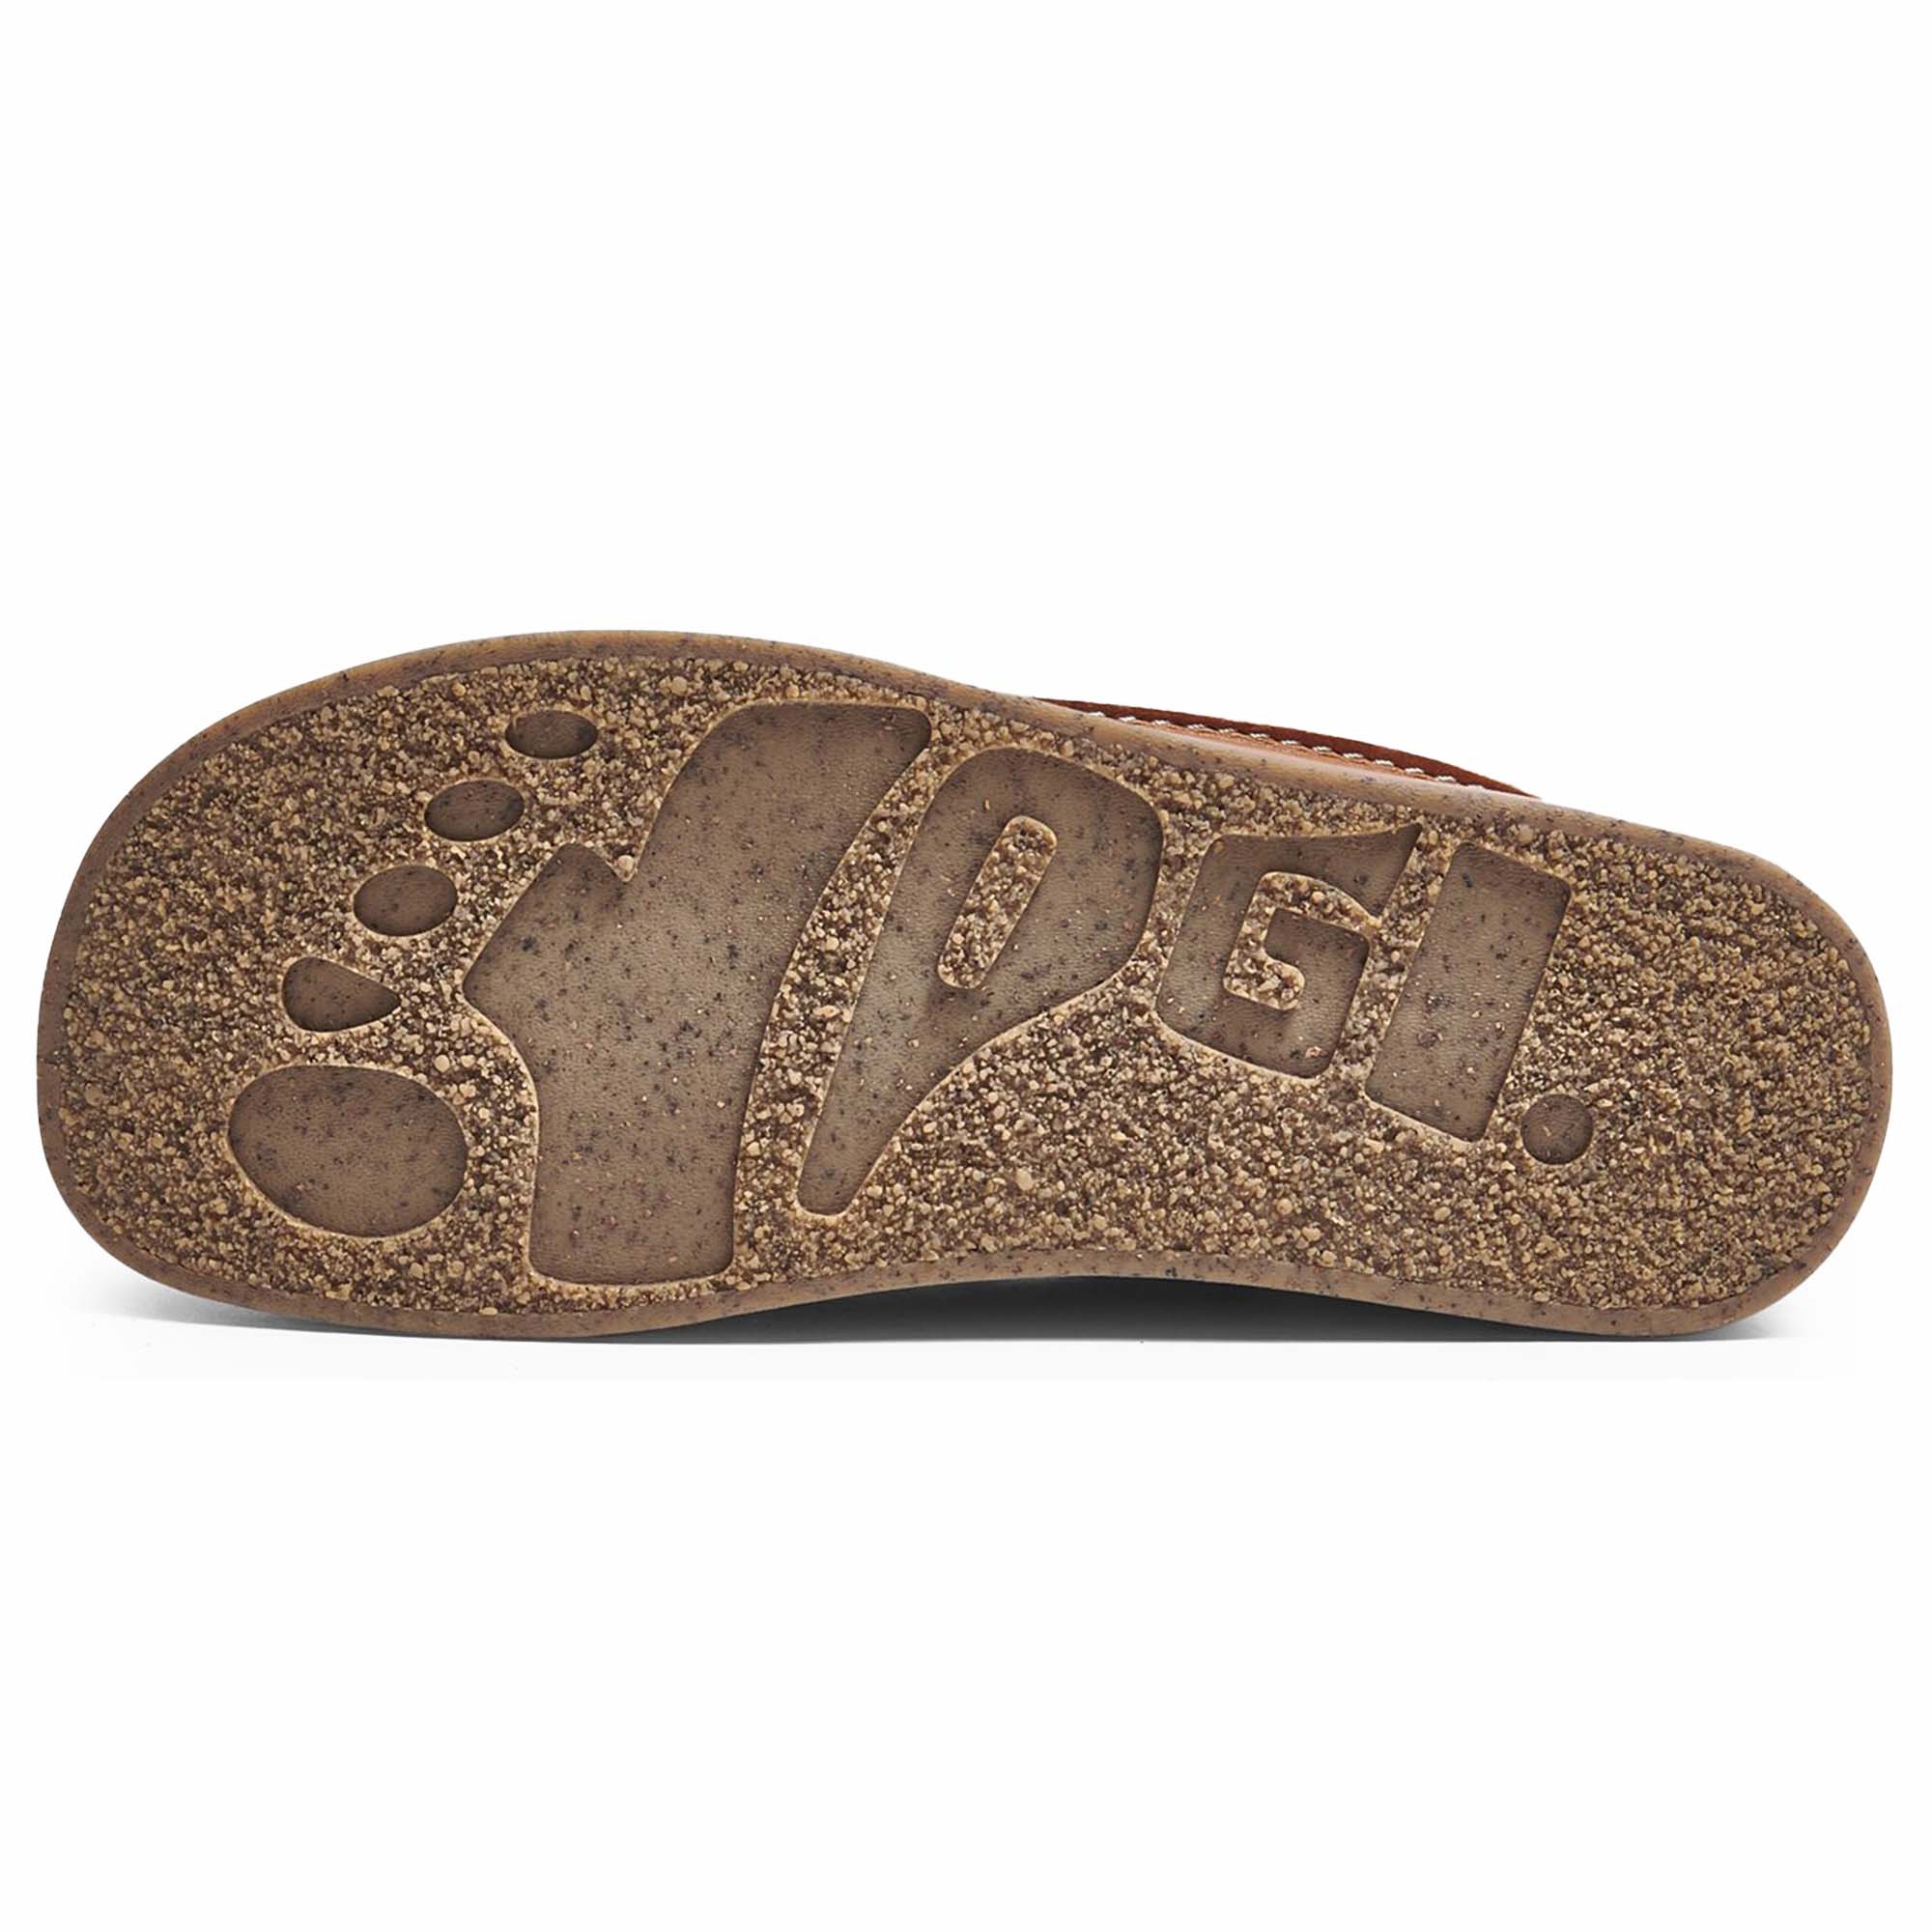 Yogi Finn Recycled Negative Heel Shoe - Apricot Leather